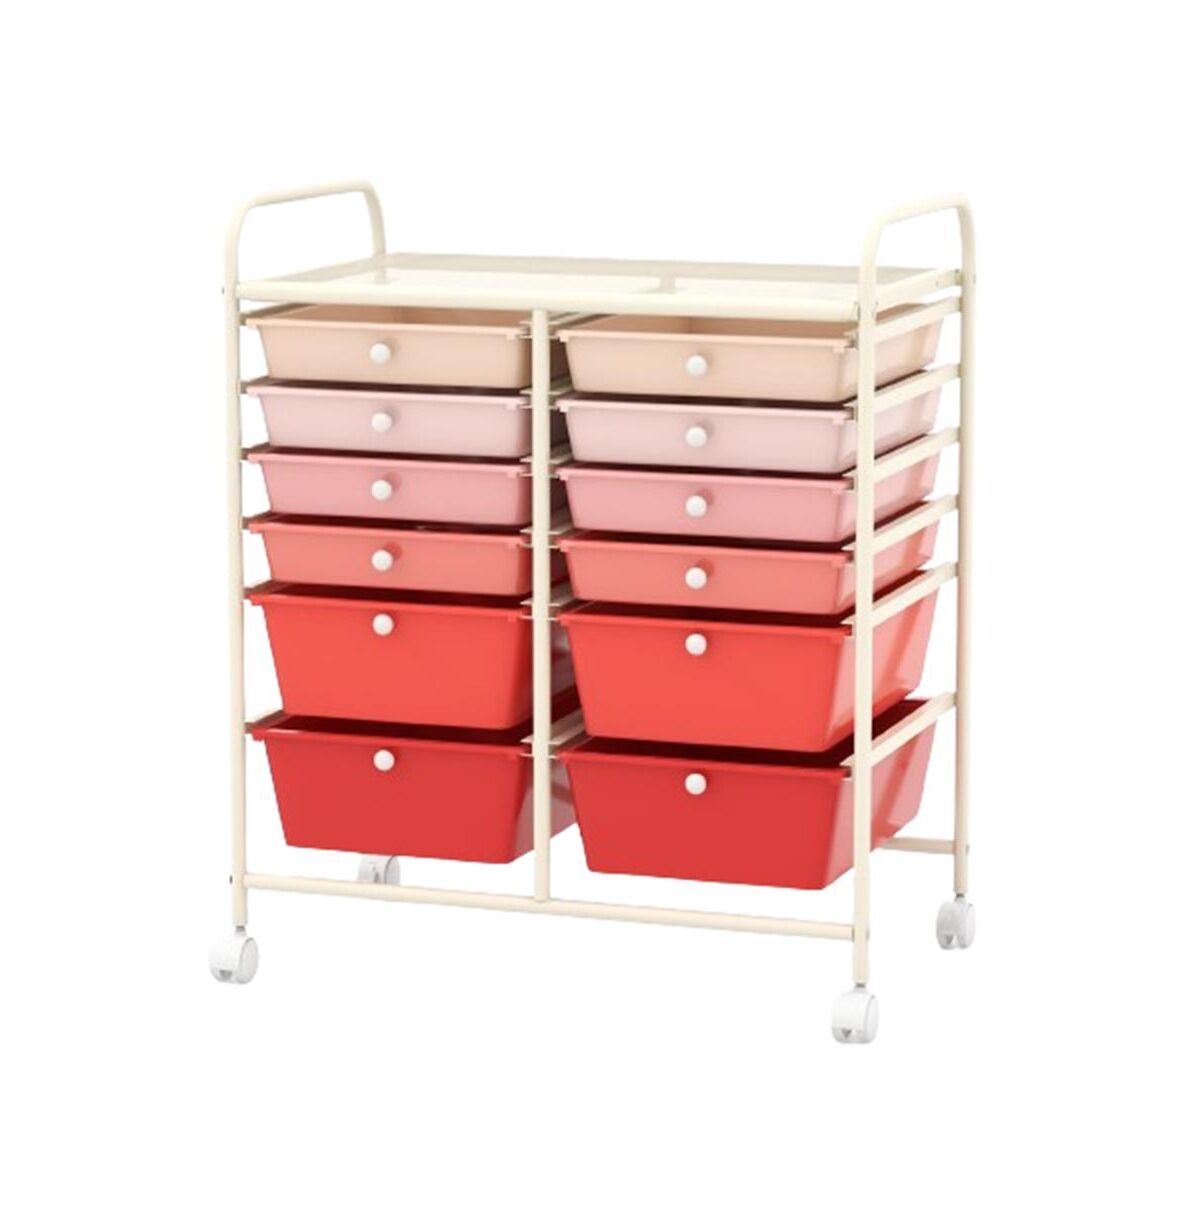 Slickblue 12 Drawers Rolling Cart Storage Scrapbook Paper Organizer Bins - Red